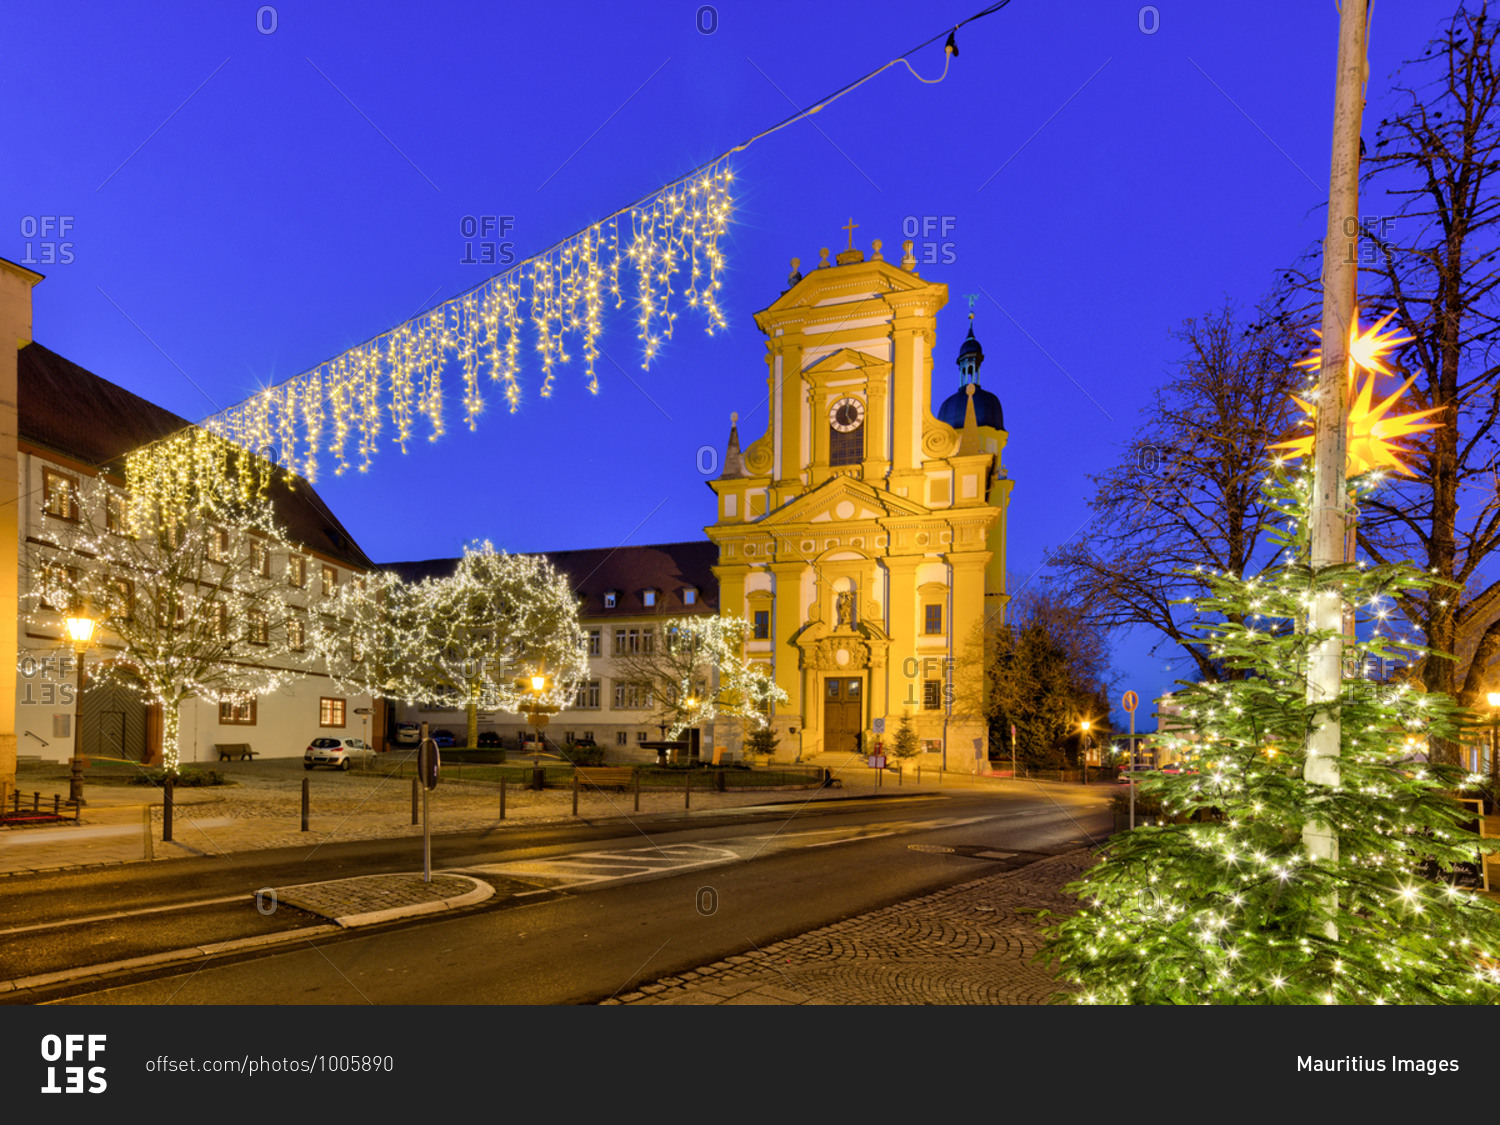 Evangelische Stadtkirche, blue hour, Christmas decoration, Kitzingen, Franconia, Bavaria, Germany, Europe